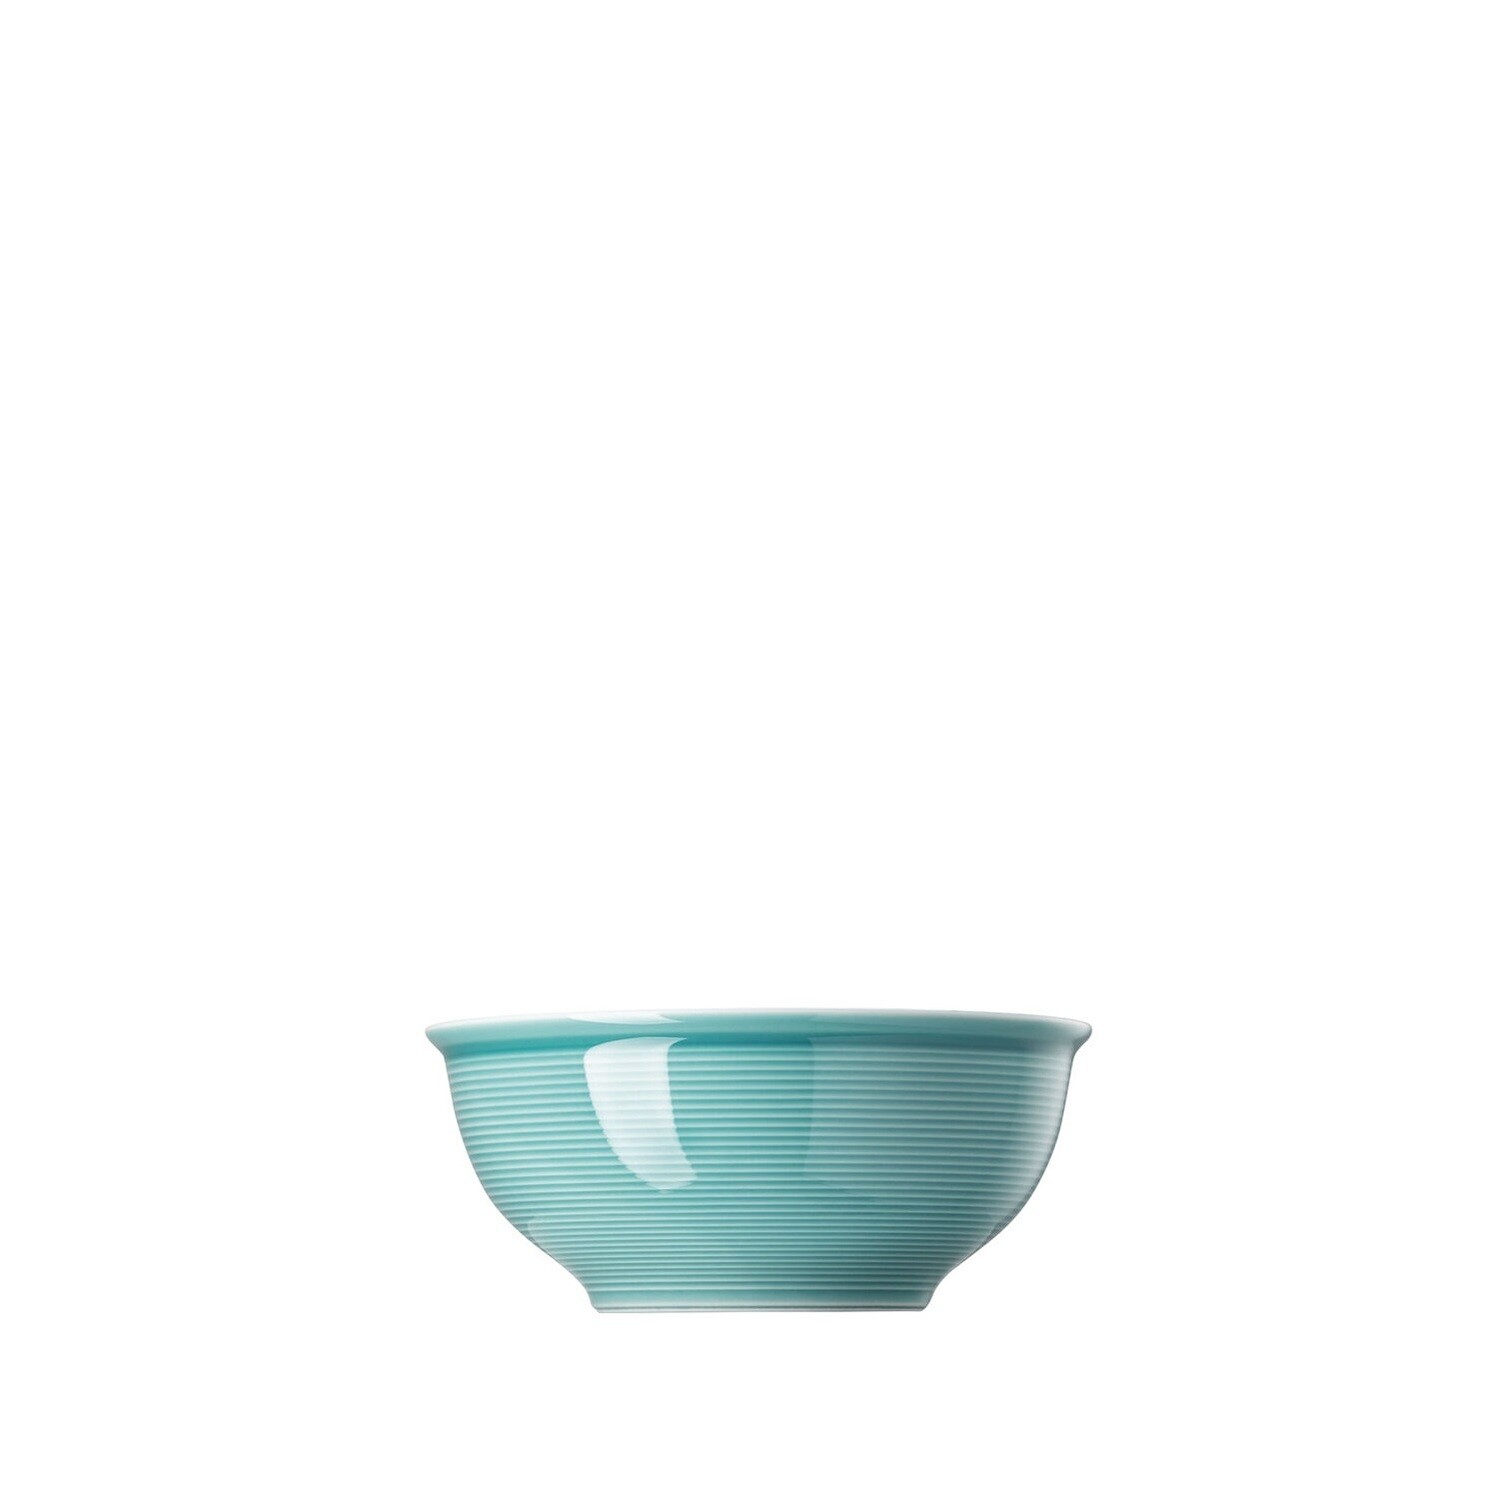 THOMAS 'trend' bowl 17cm ice blue  PROMO 19,50 -20%